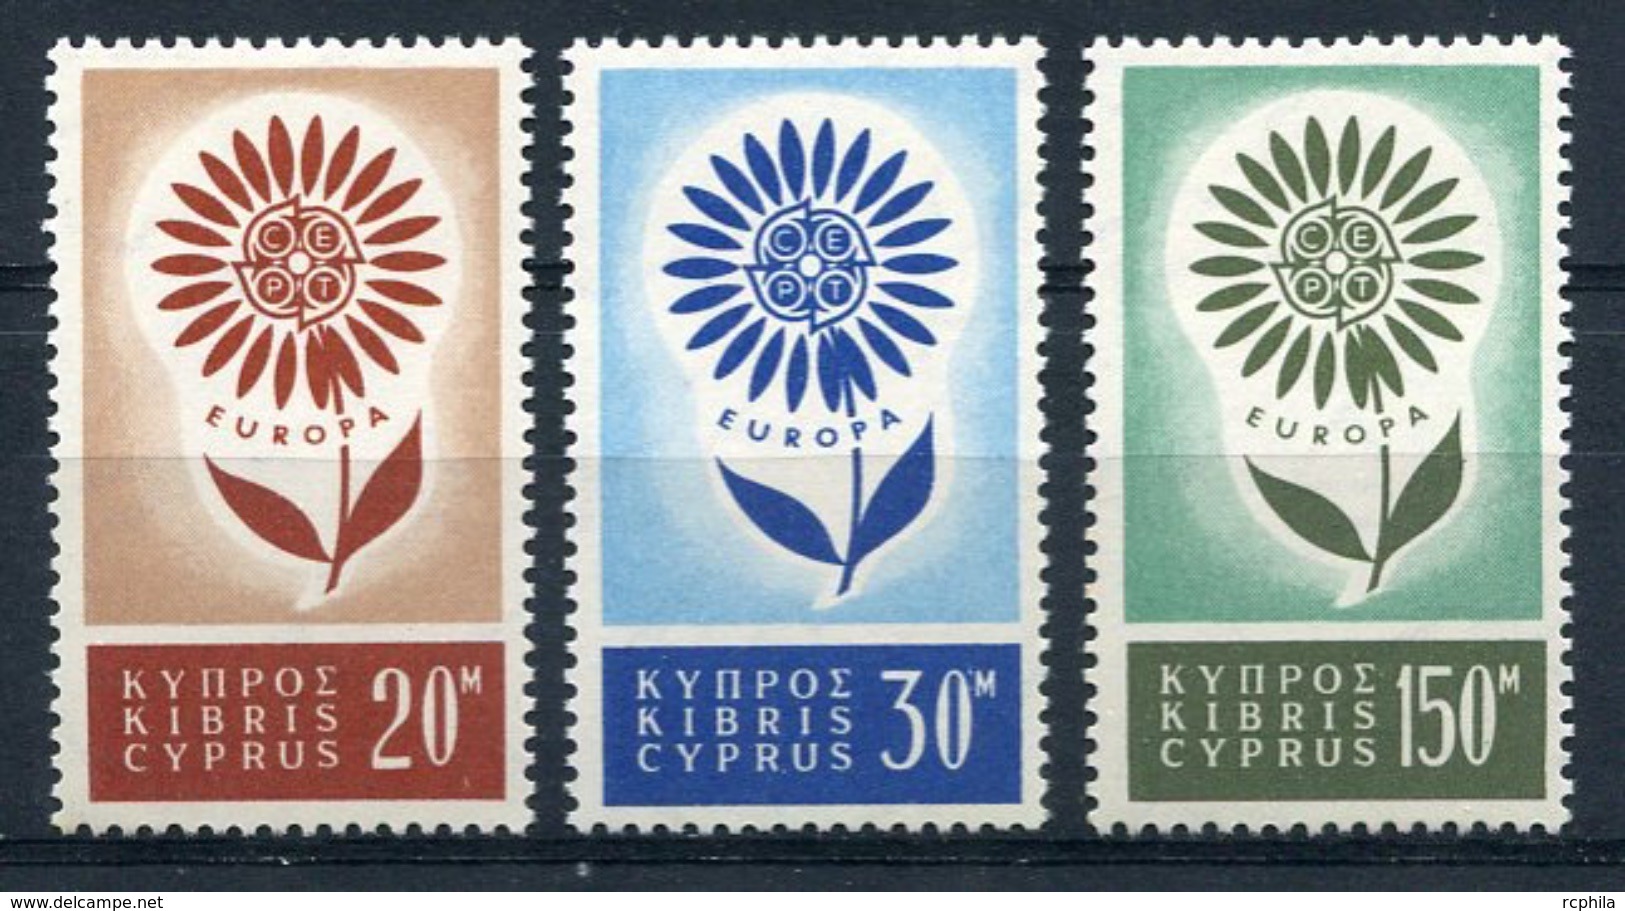 RC 8021 CHYPRE CYPRUS 232 / 234 - SERIE EUROPA 1964 COMPLÈTE COTE 60€ NEUF ** TB - Chypre (...-1960)